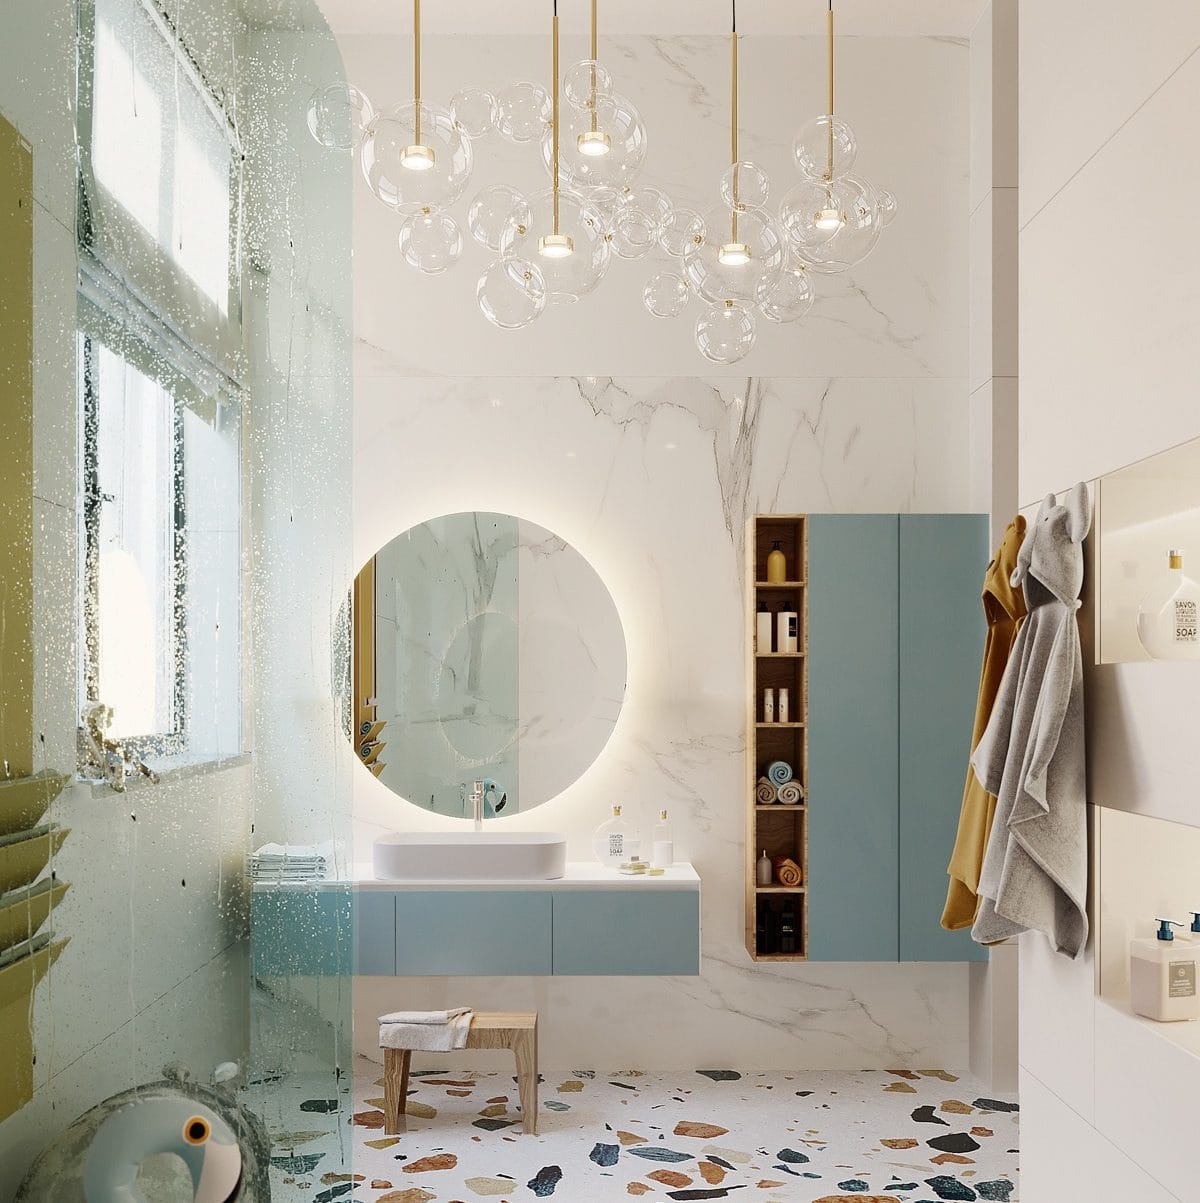 Lighting design tips for your bathroom